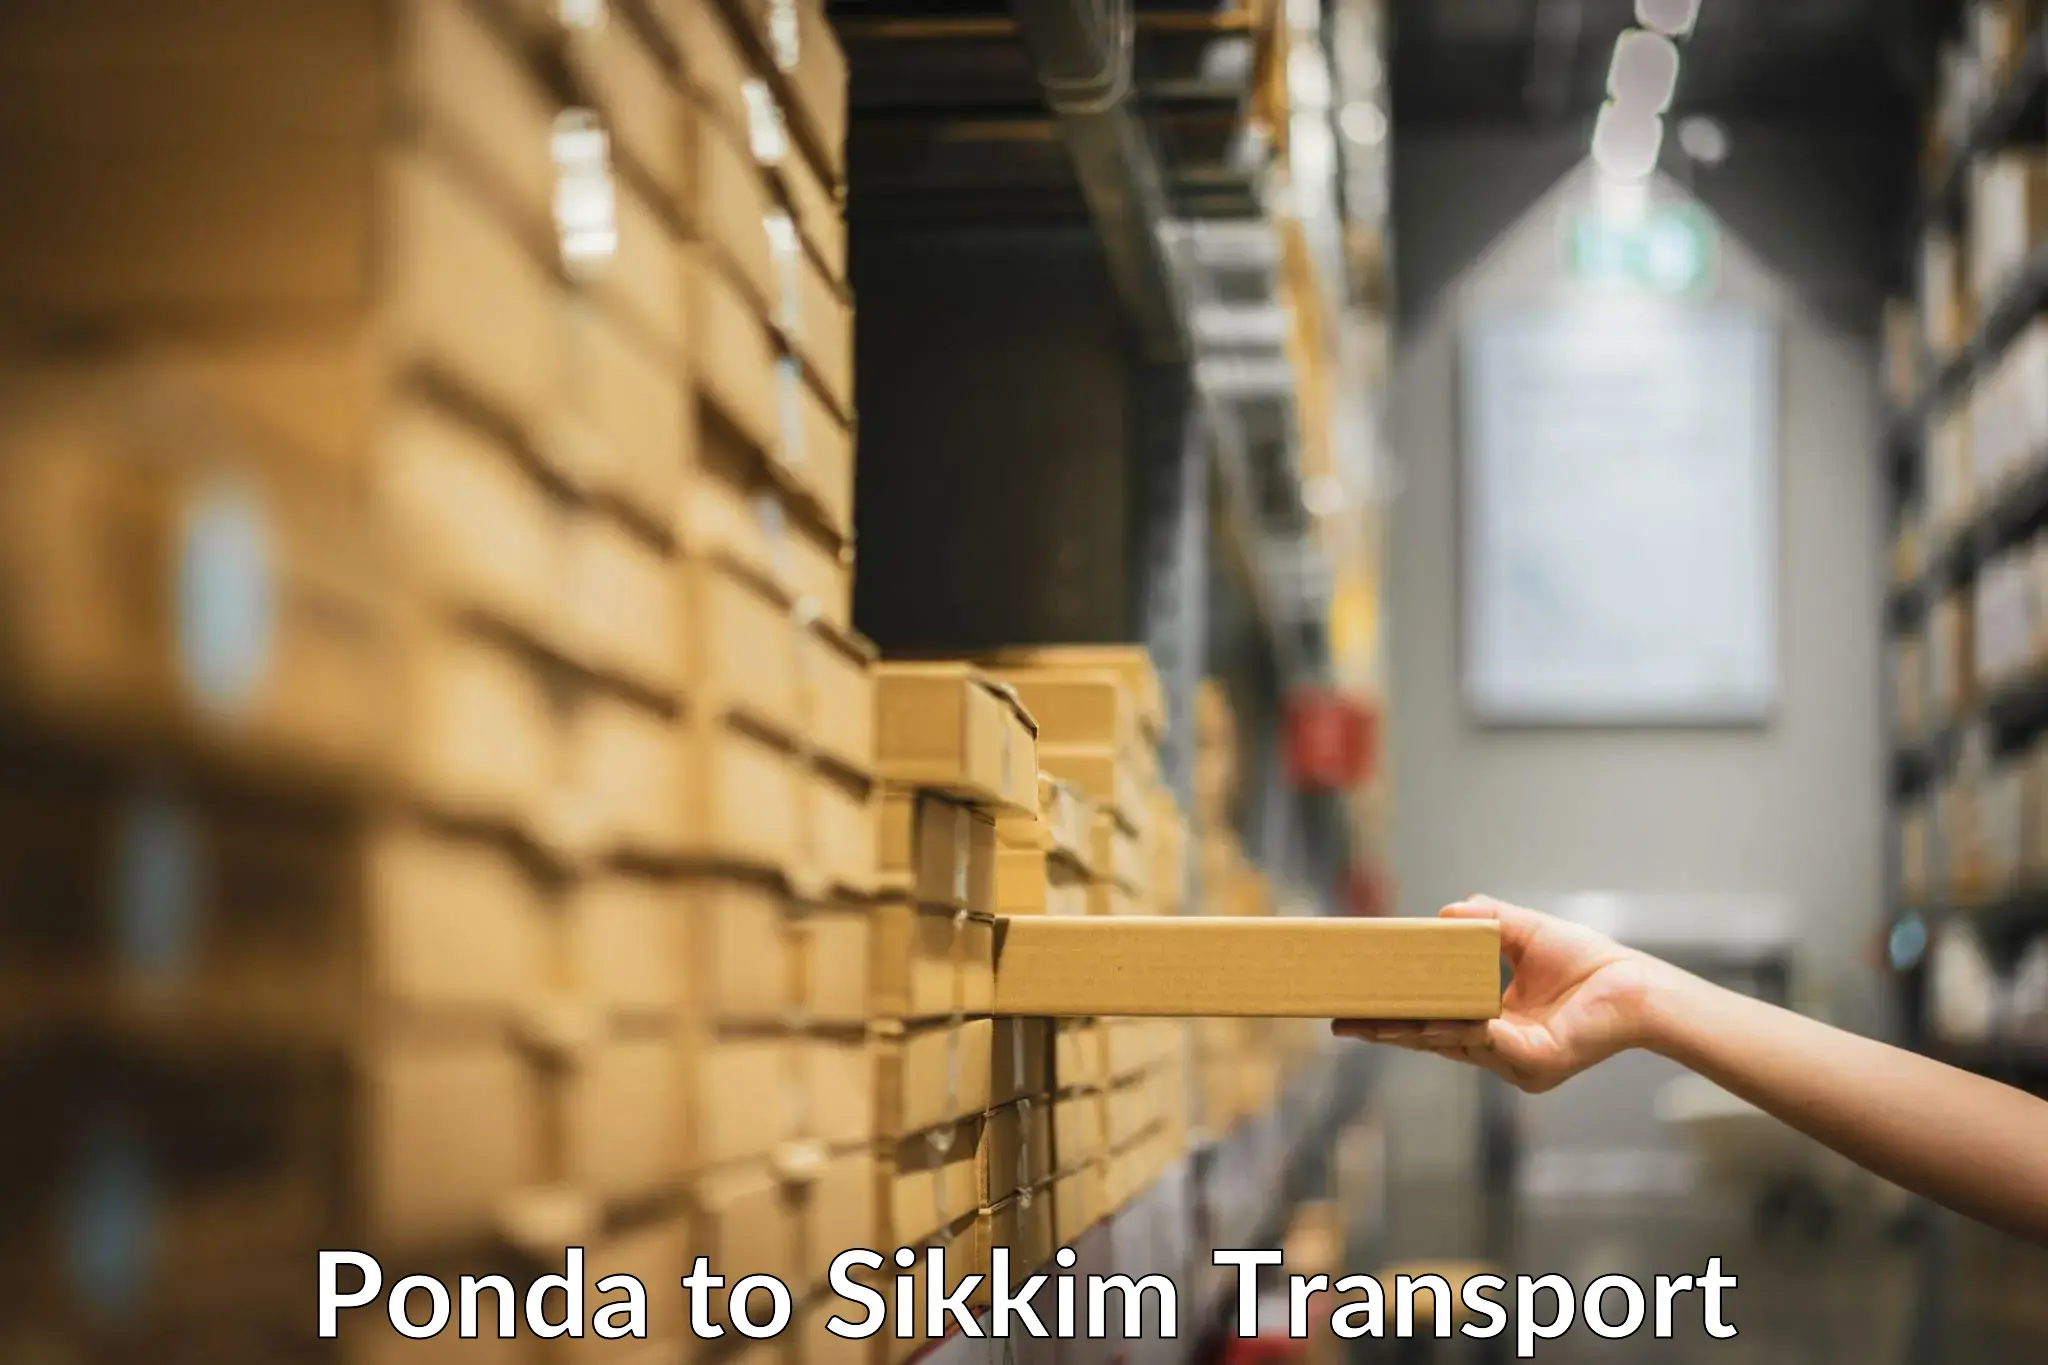 Daily transport service Ponda to Gangtok